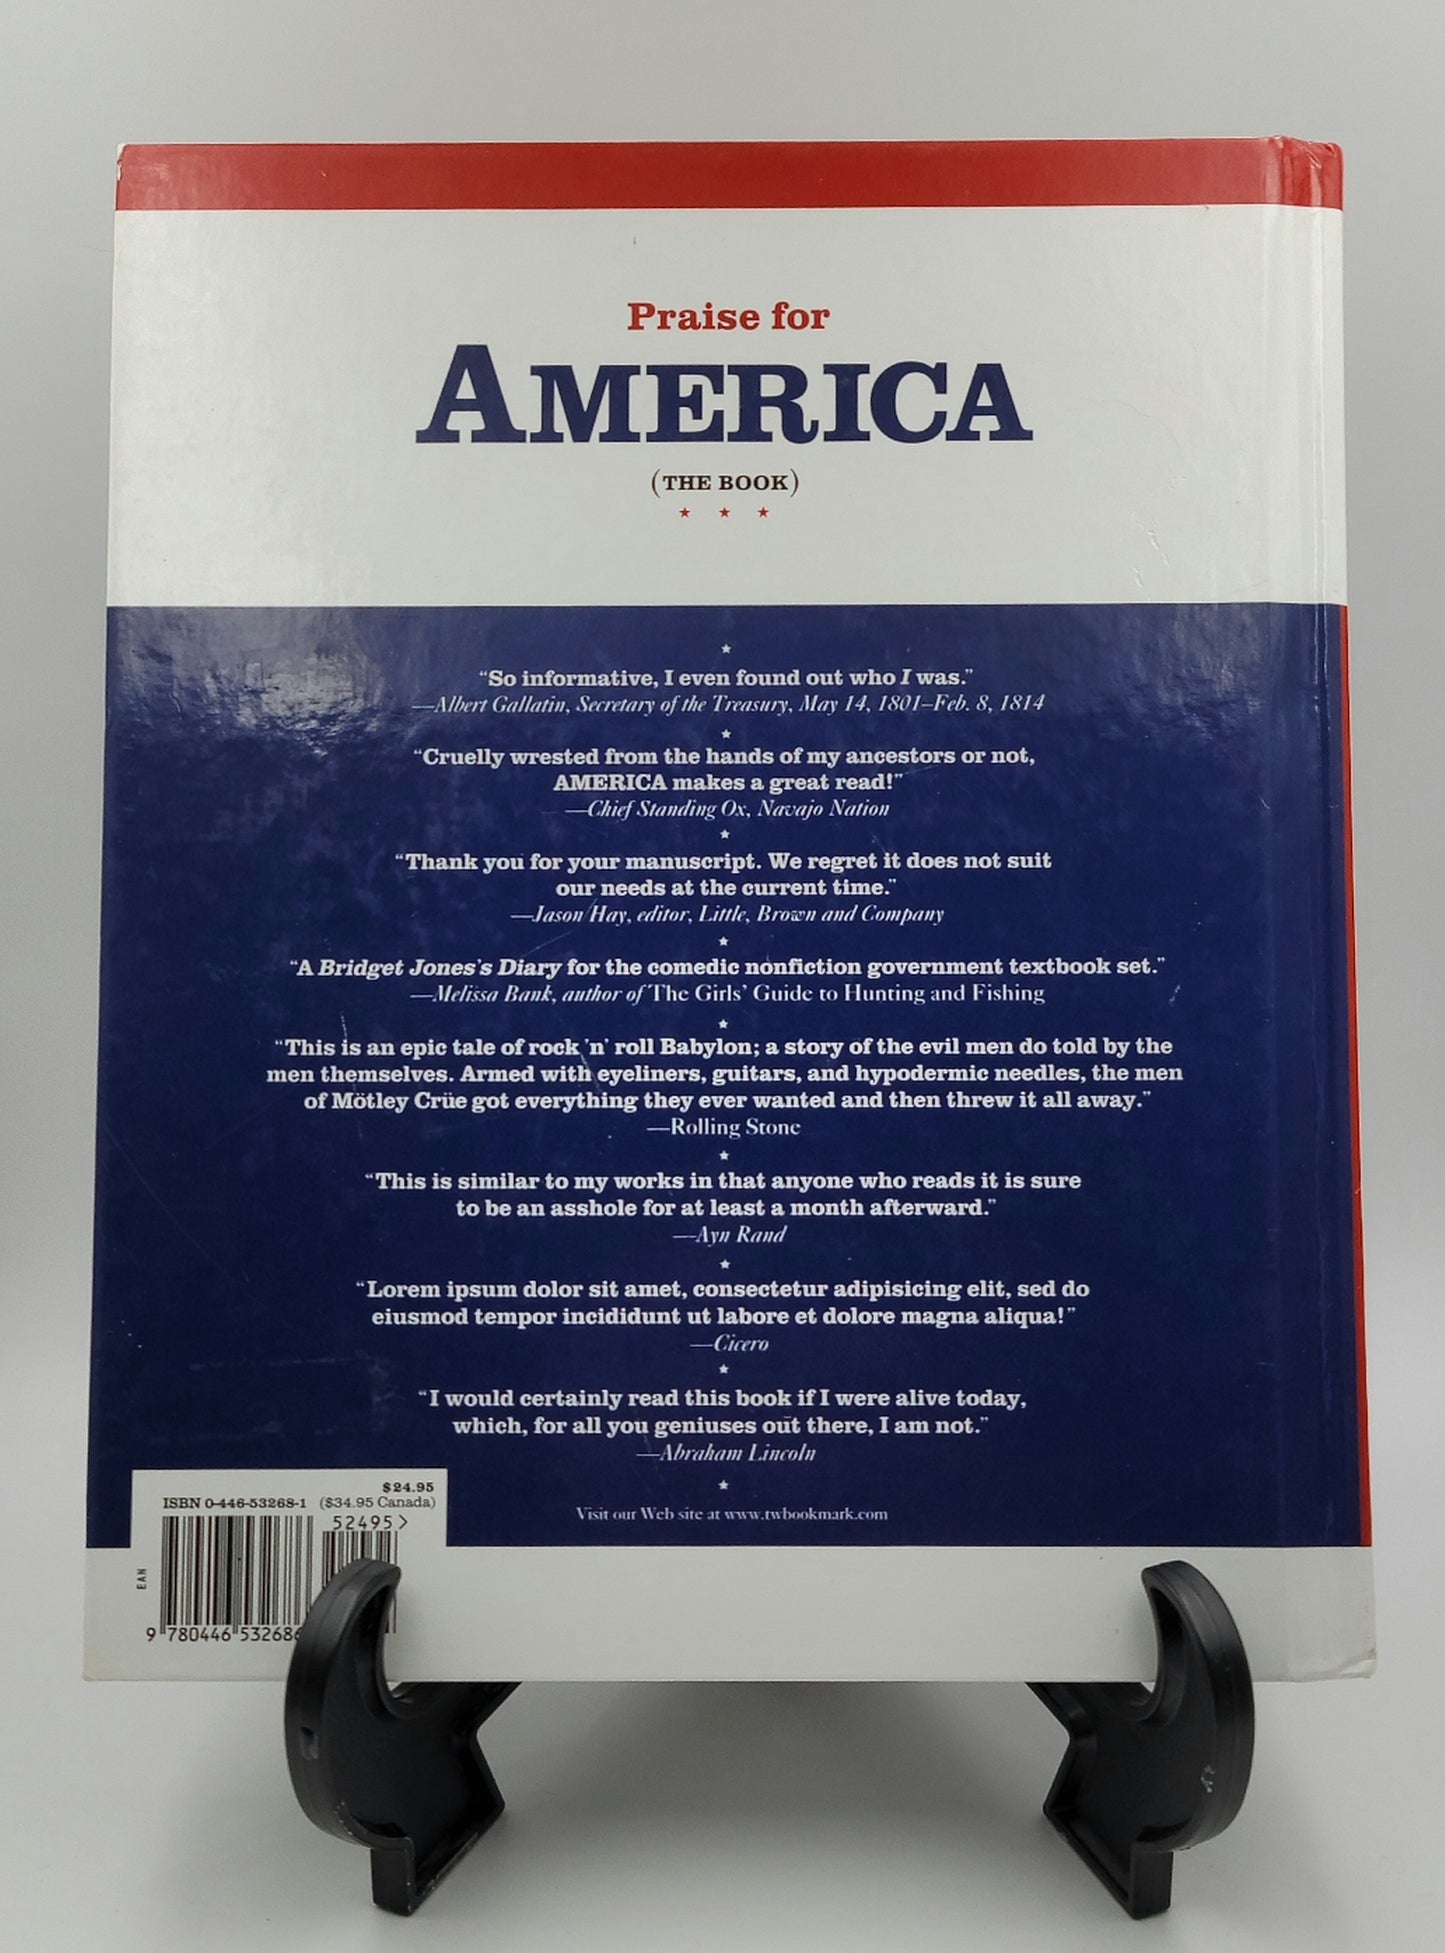 America (The Book) by Jon Stewart